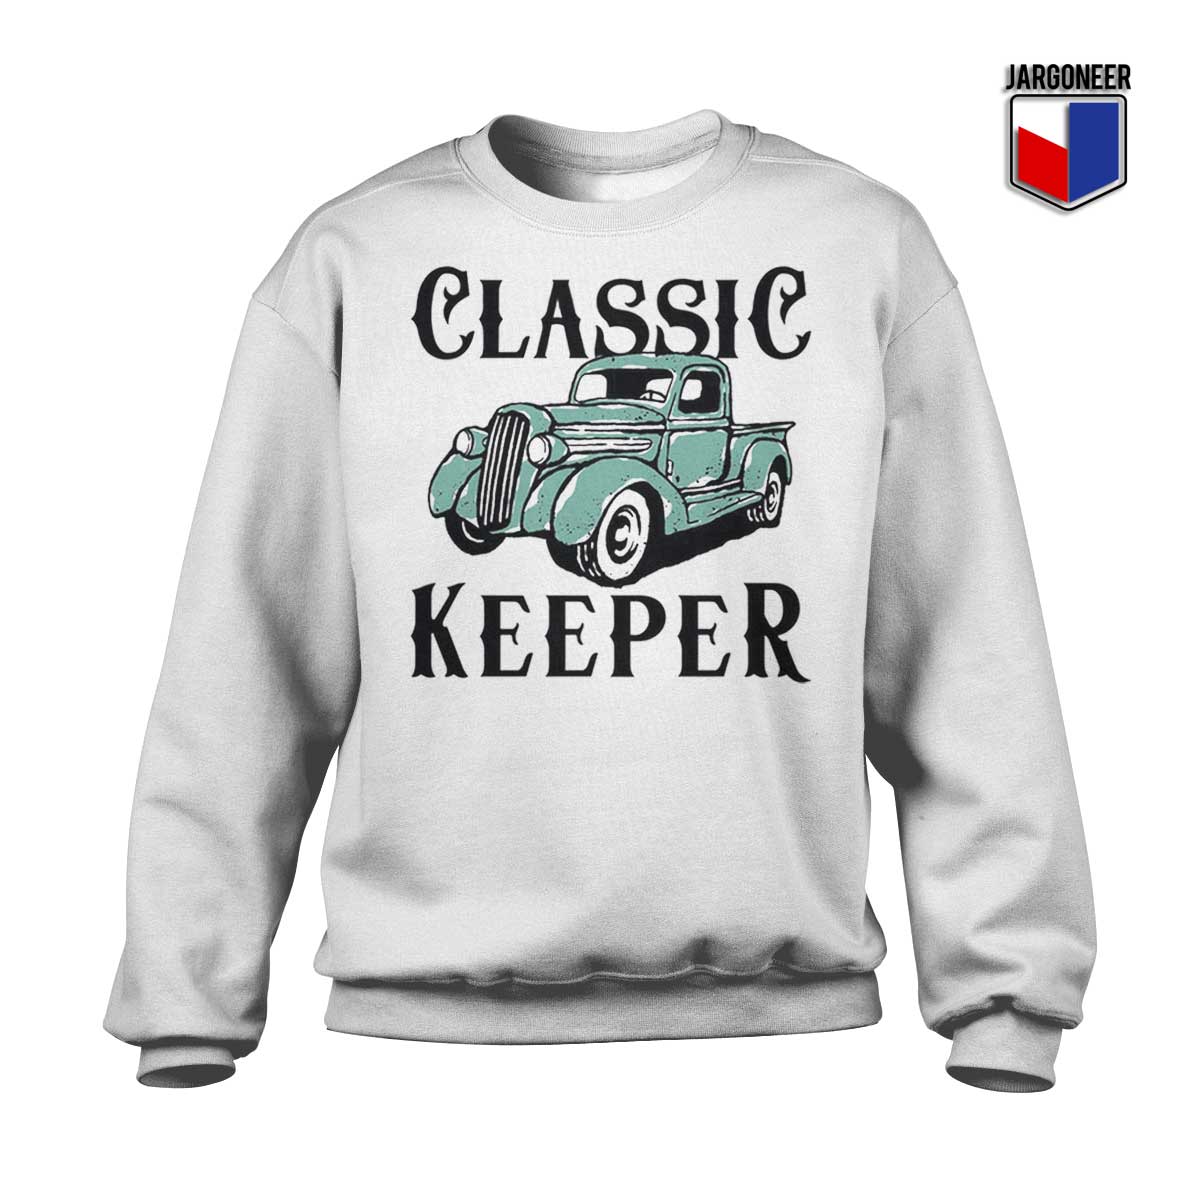 Classic Car Keeper Sweatshirt - Shop Unique Graphic Cool Shirt Designs